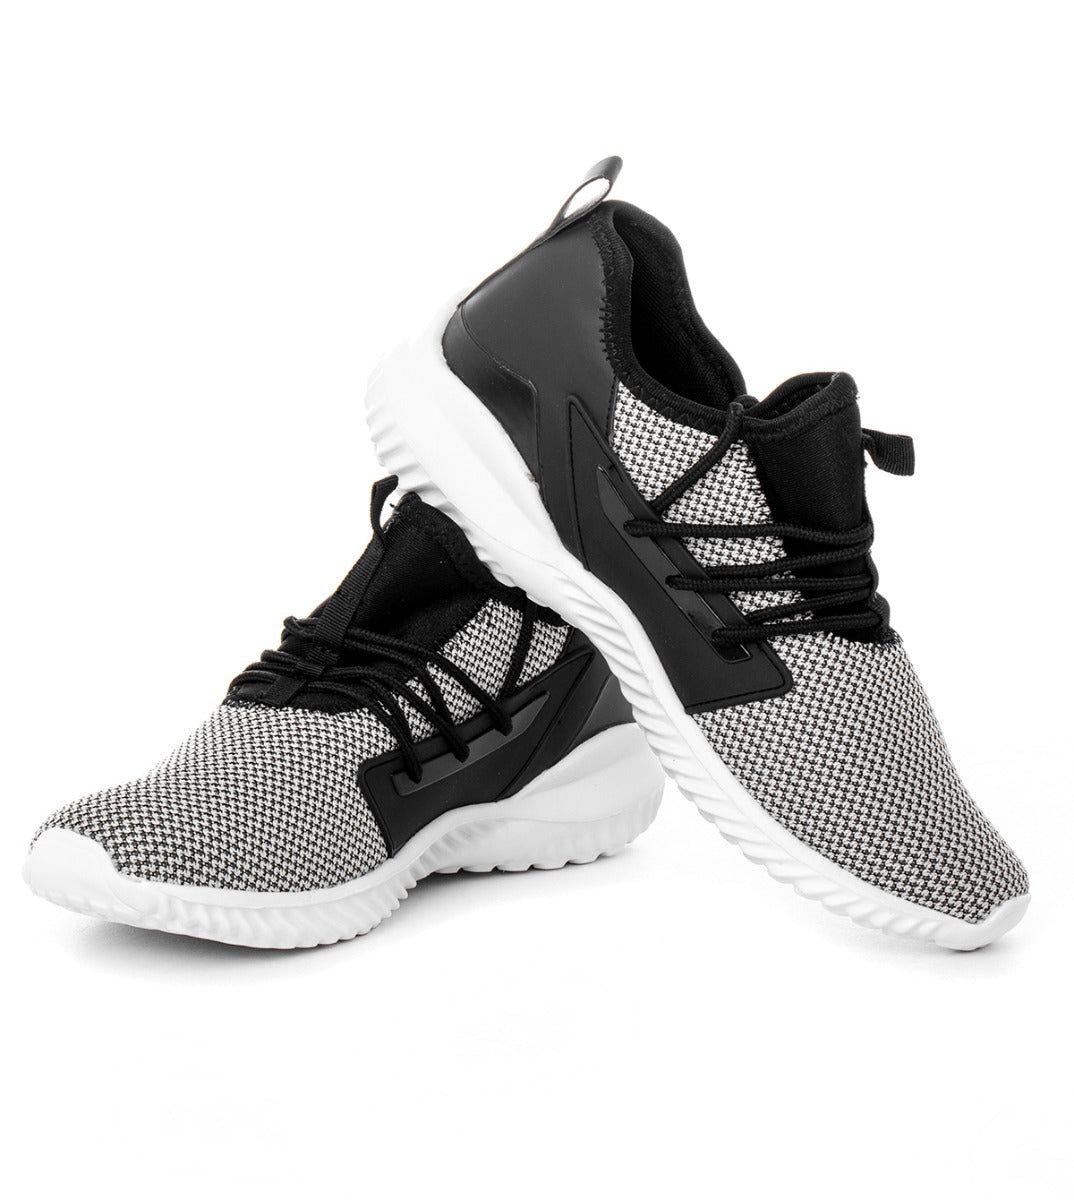 Scarpe Uomo Shoes Sneakers Sportiva Casual Nera GIOSAL-S1104A